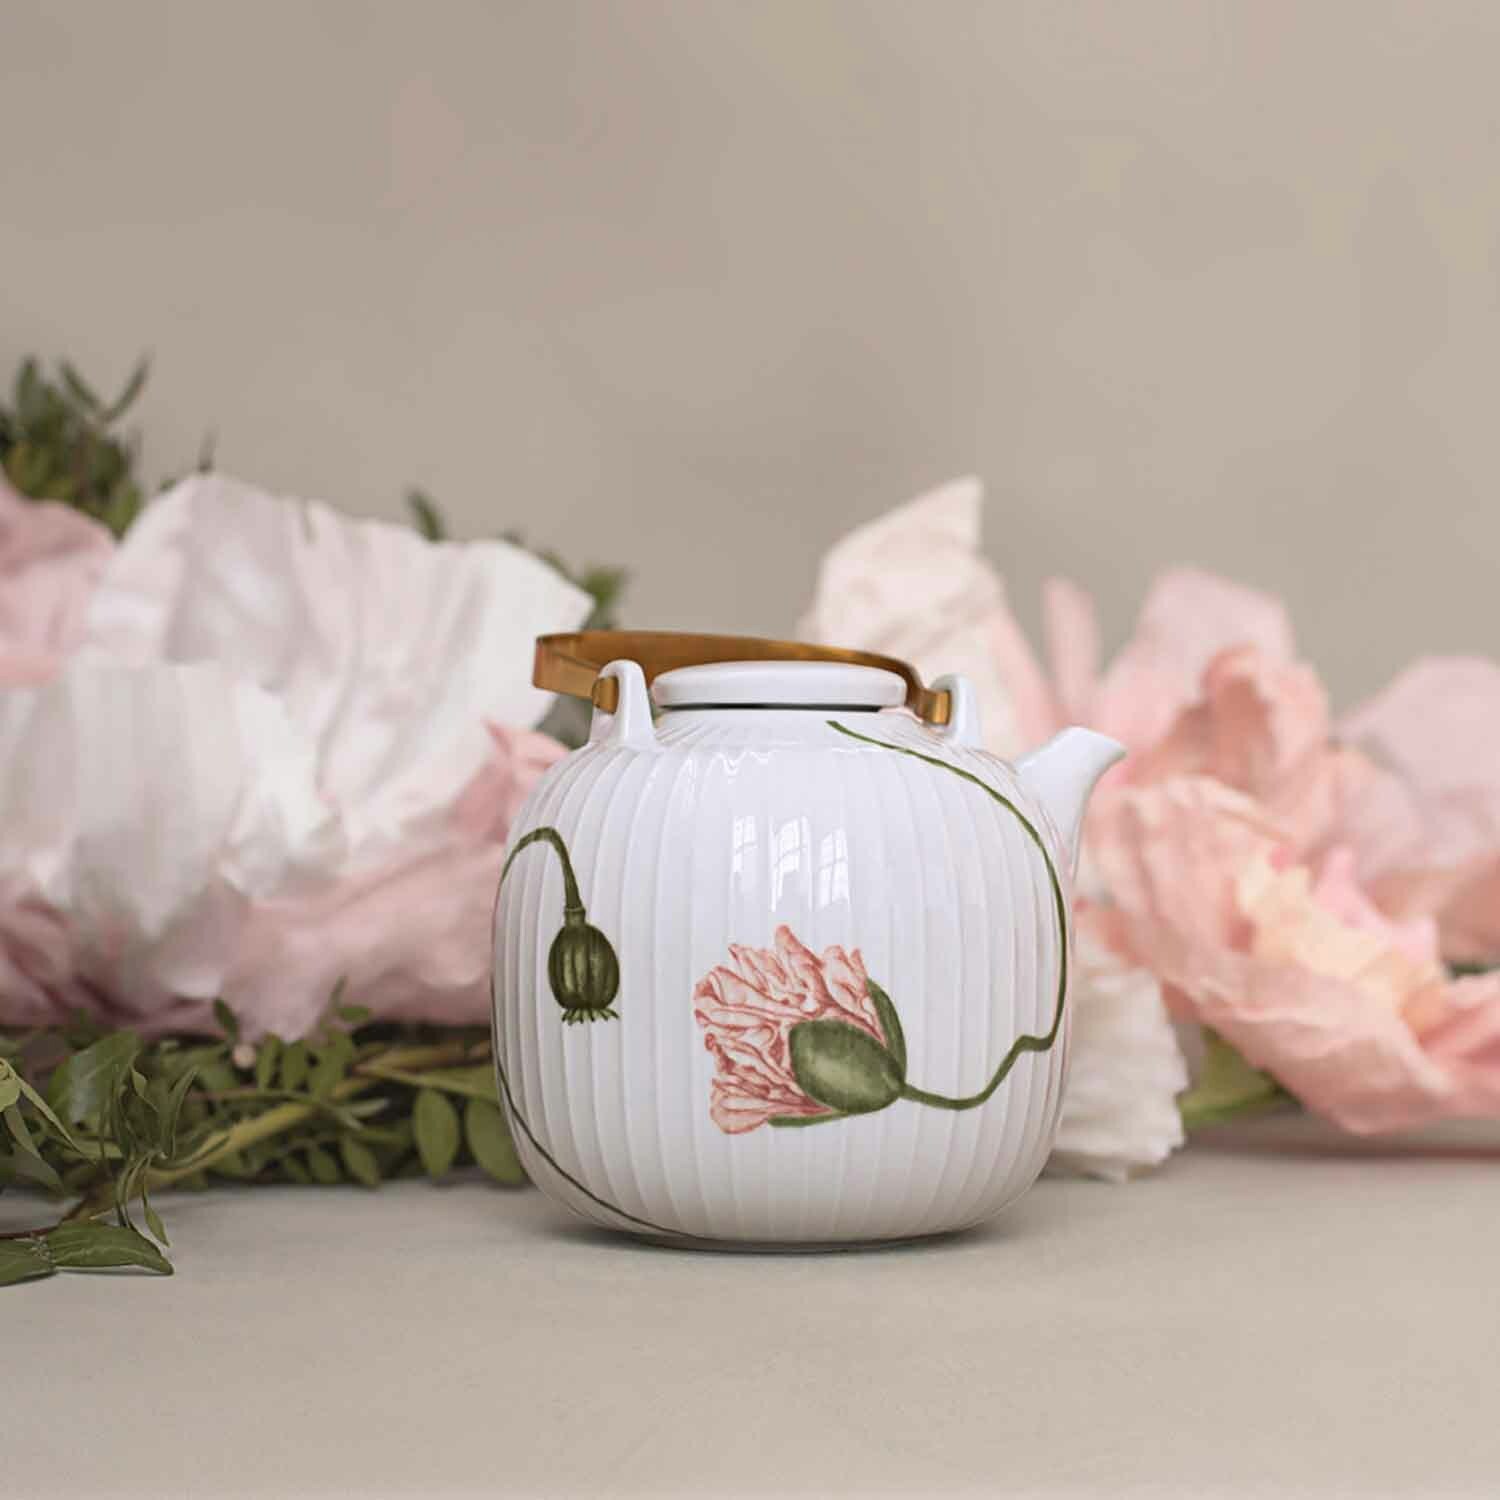 https://royaldesign.com/image/11/kahler-hammershi-poppy-teapot-12-l-5